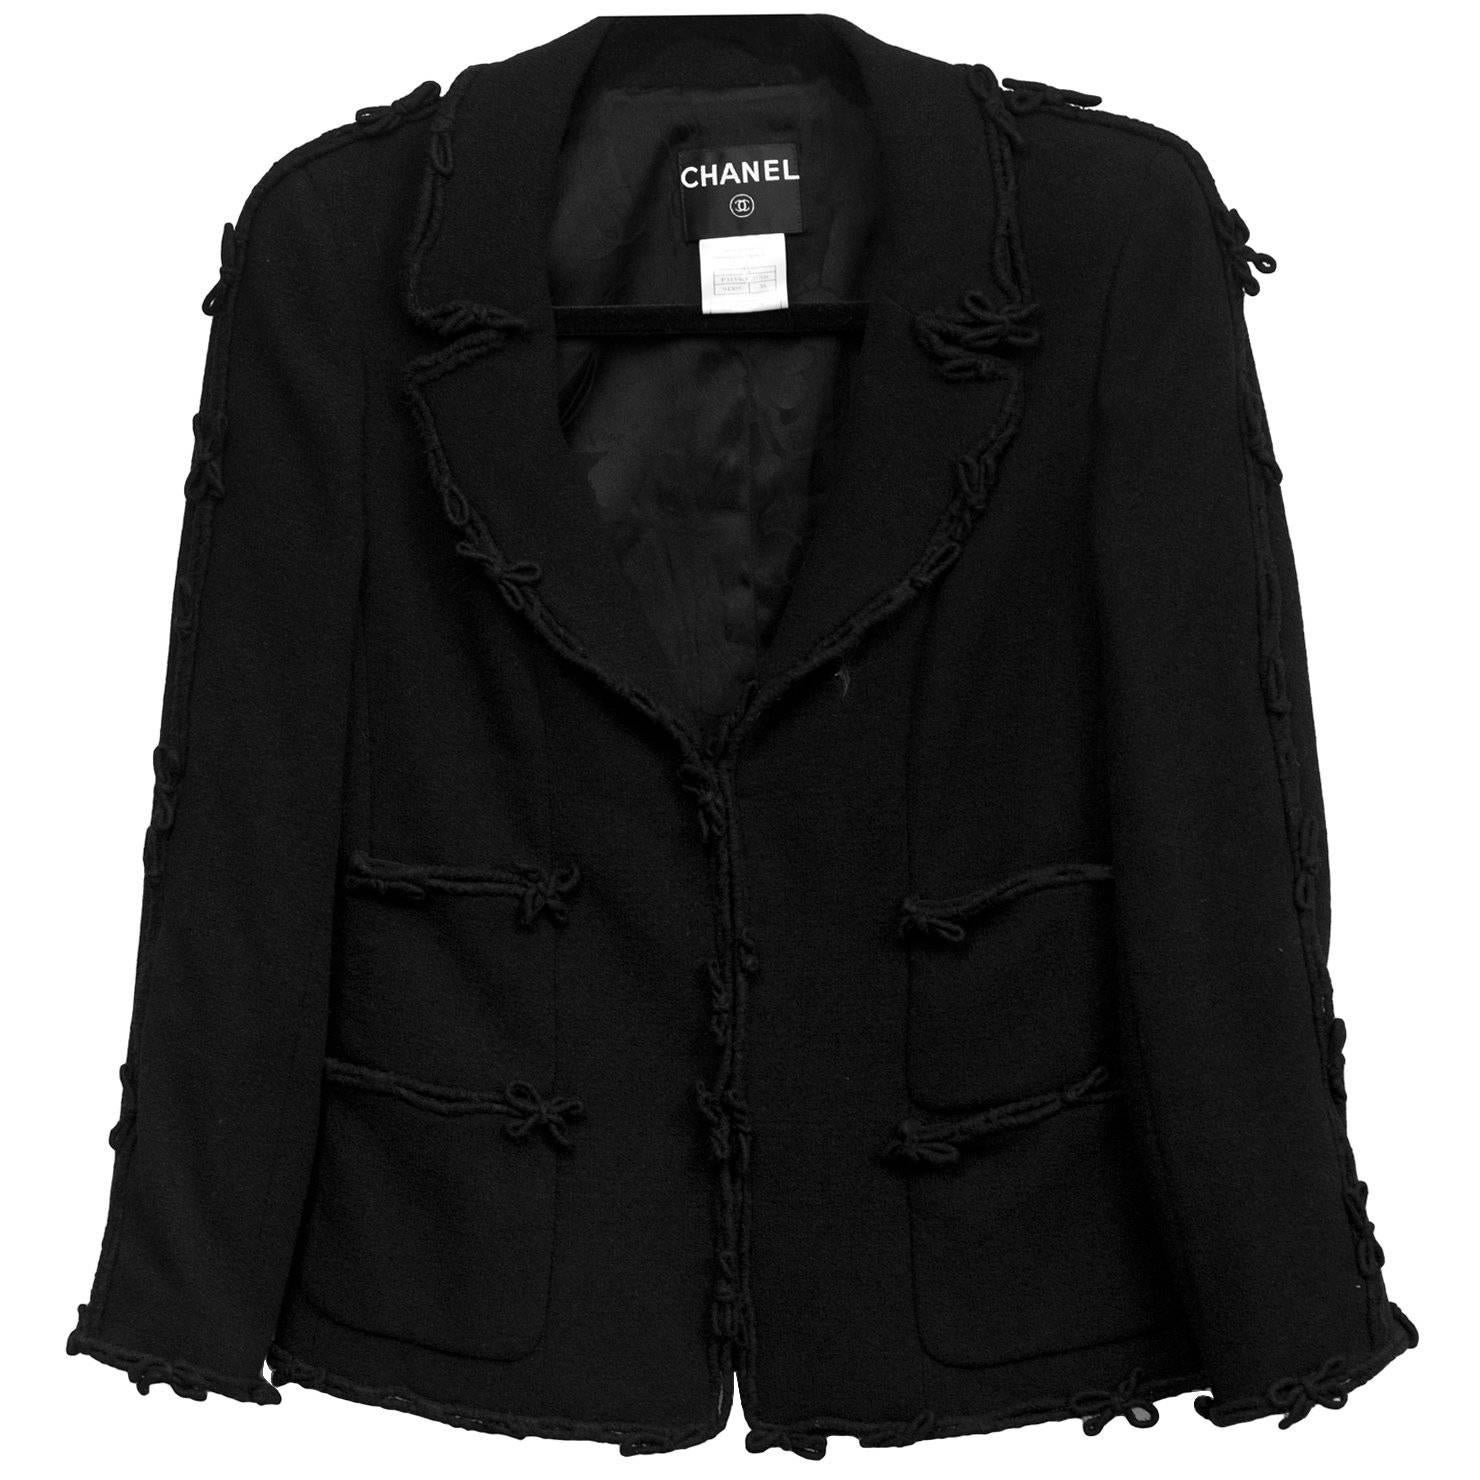 Chanel Black Wool Jacket with Bow Trim Detail Sz FR38